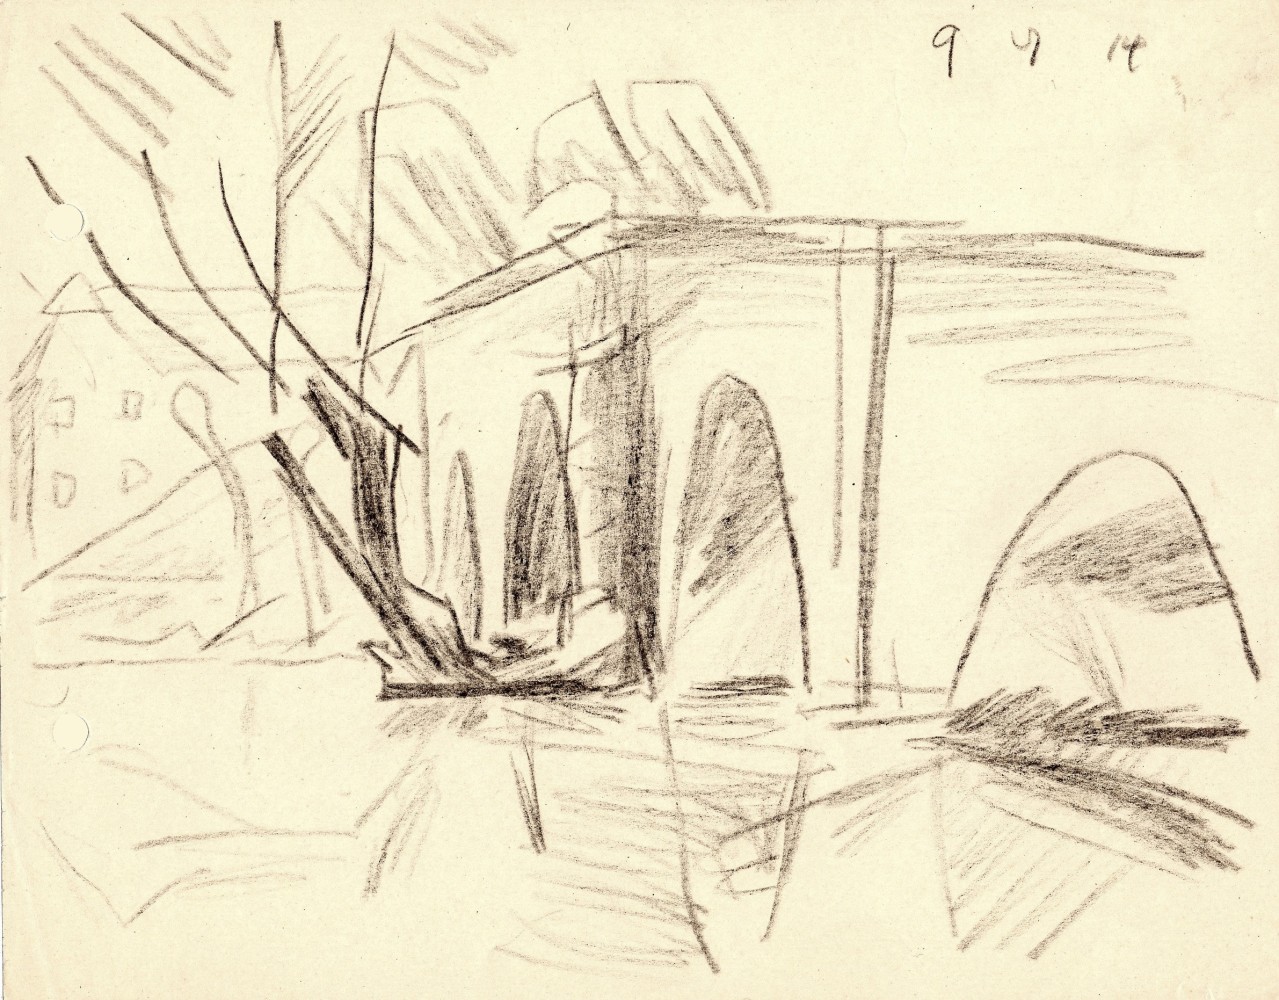 Lyonel Feininger (1871&amp;ndash;1956)

(Stone Bridge, Oberweimar), 1914

Pencil on paper
6 1/4 x 8 in. (15.9 x 20.3 cm)
Dated upper right: 9 VI 14

&amp;nbsp;

AMFA 0915